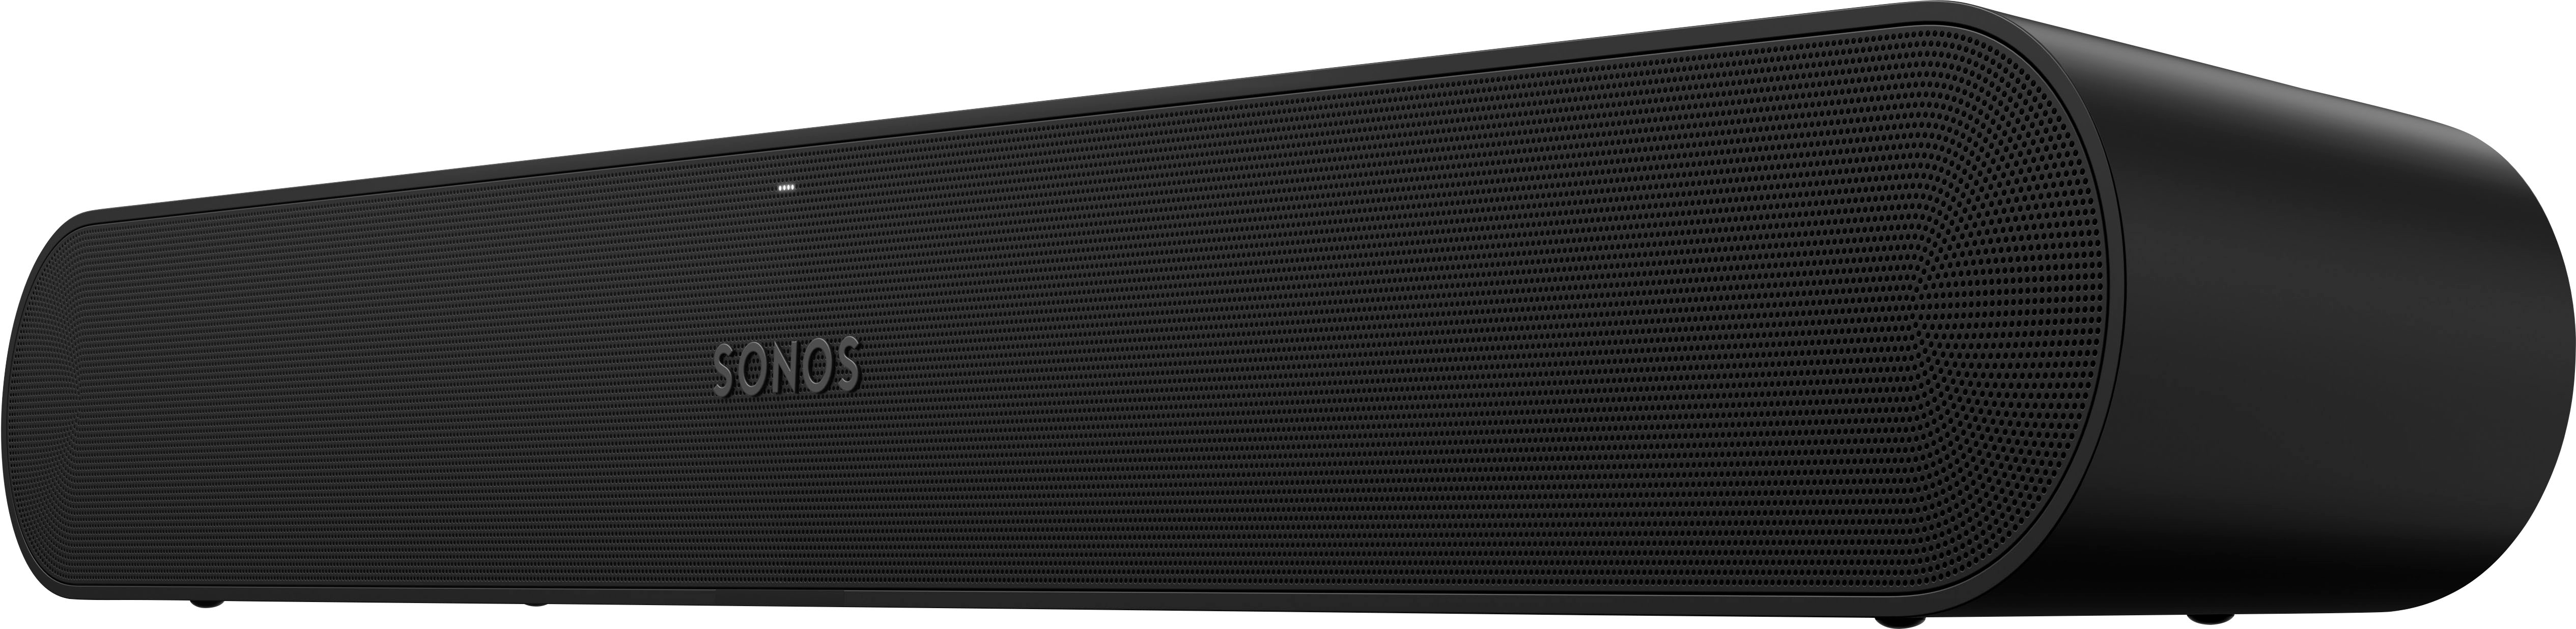 Angle View: Sonos - Ray Soundbar with Wi-Fi - Black